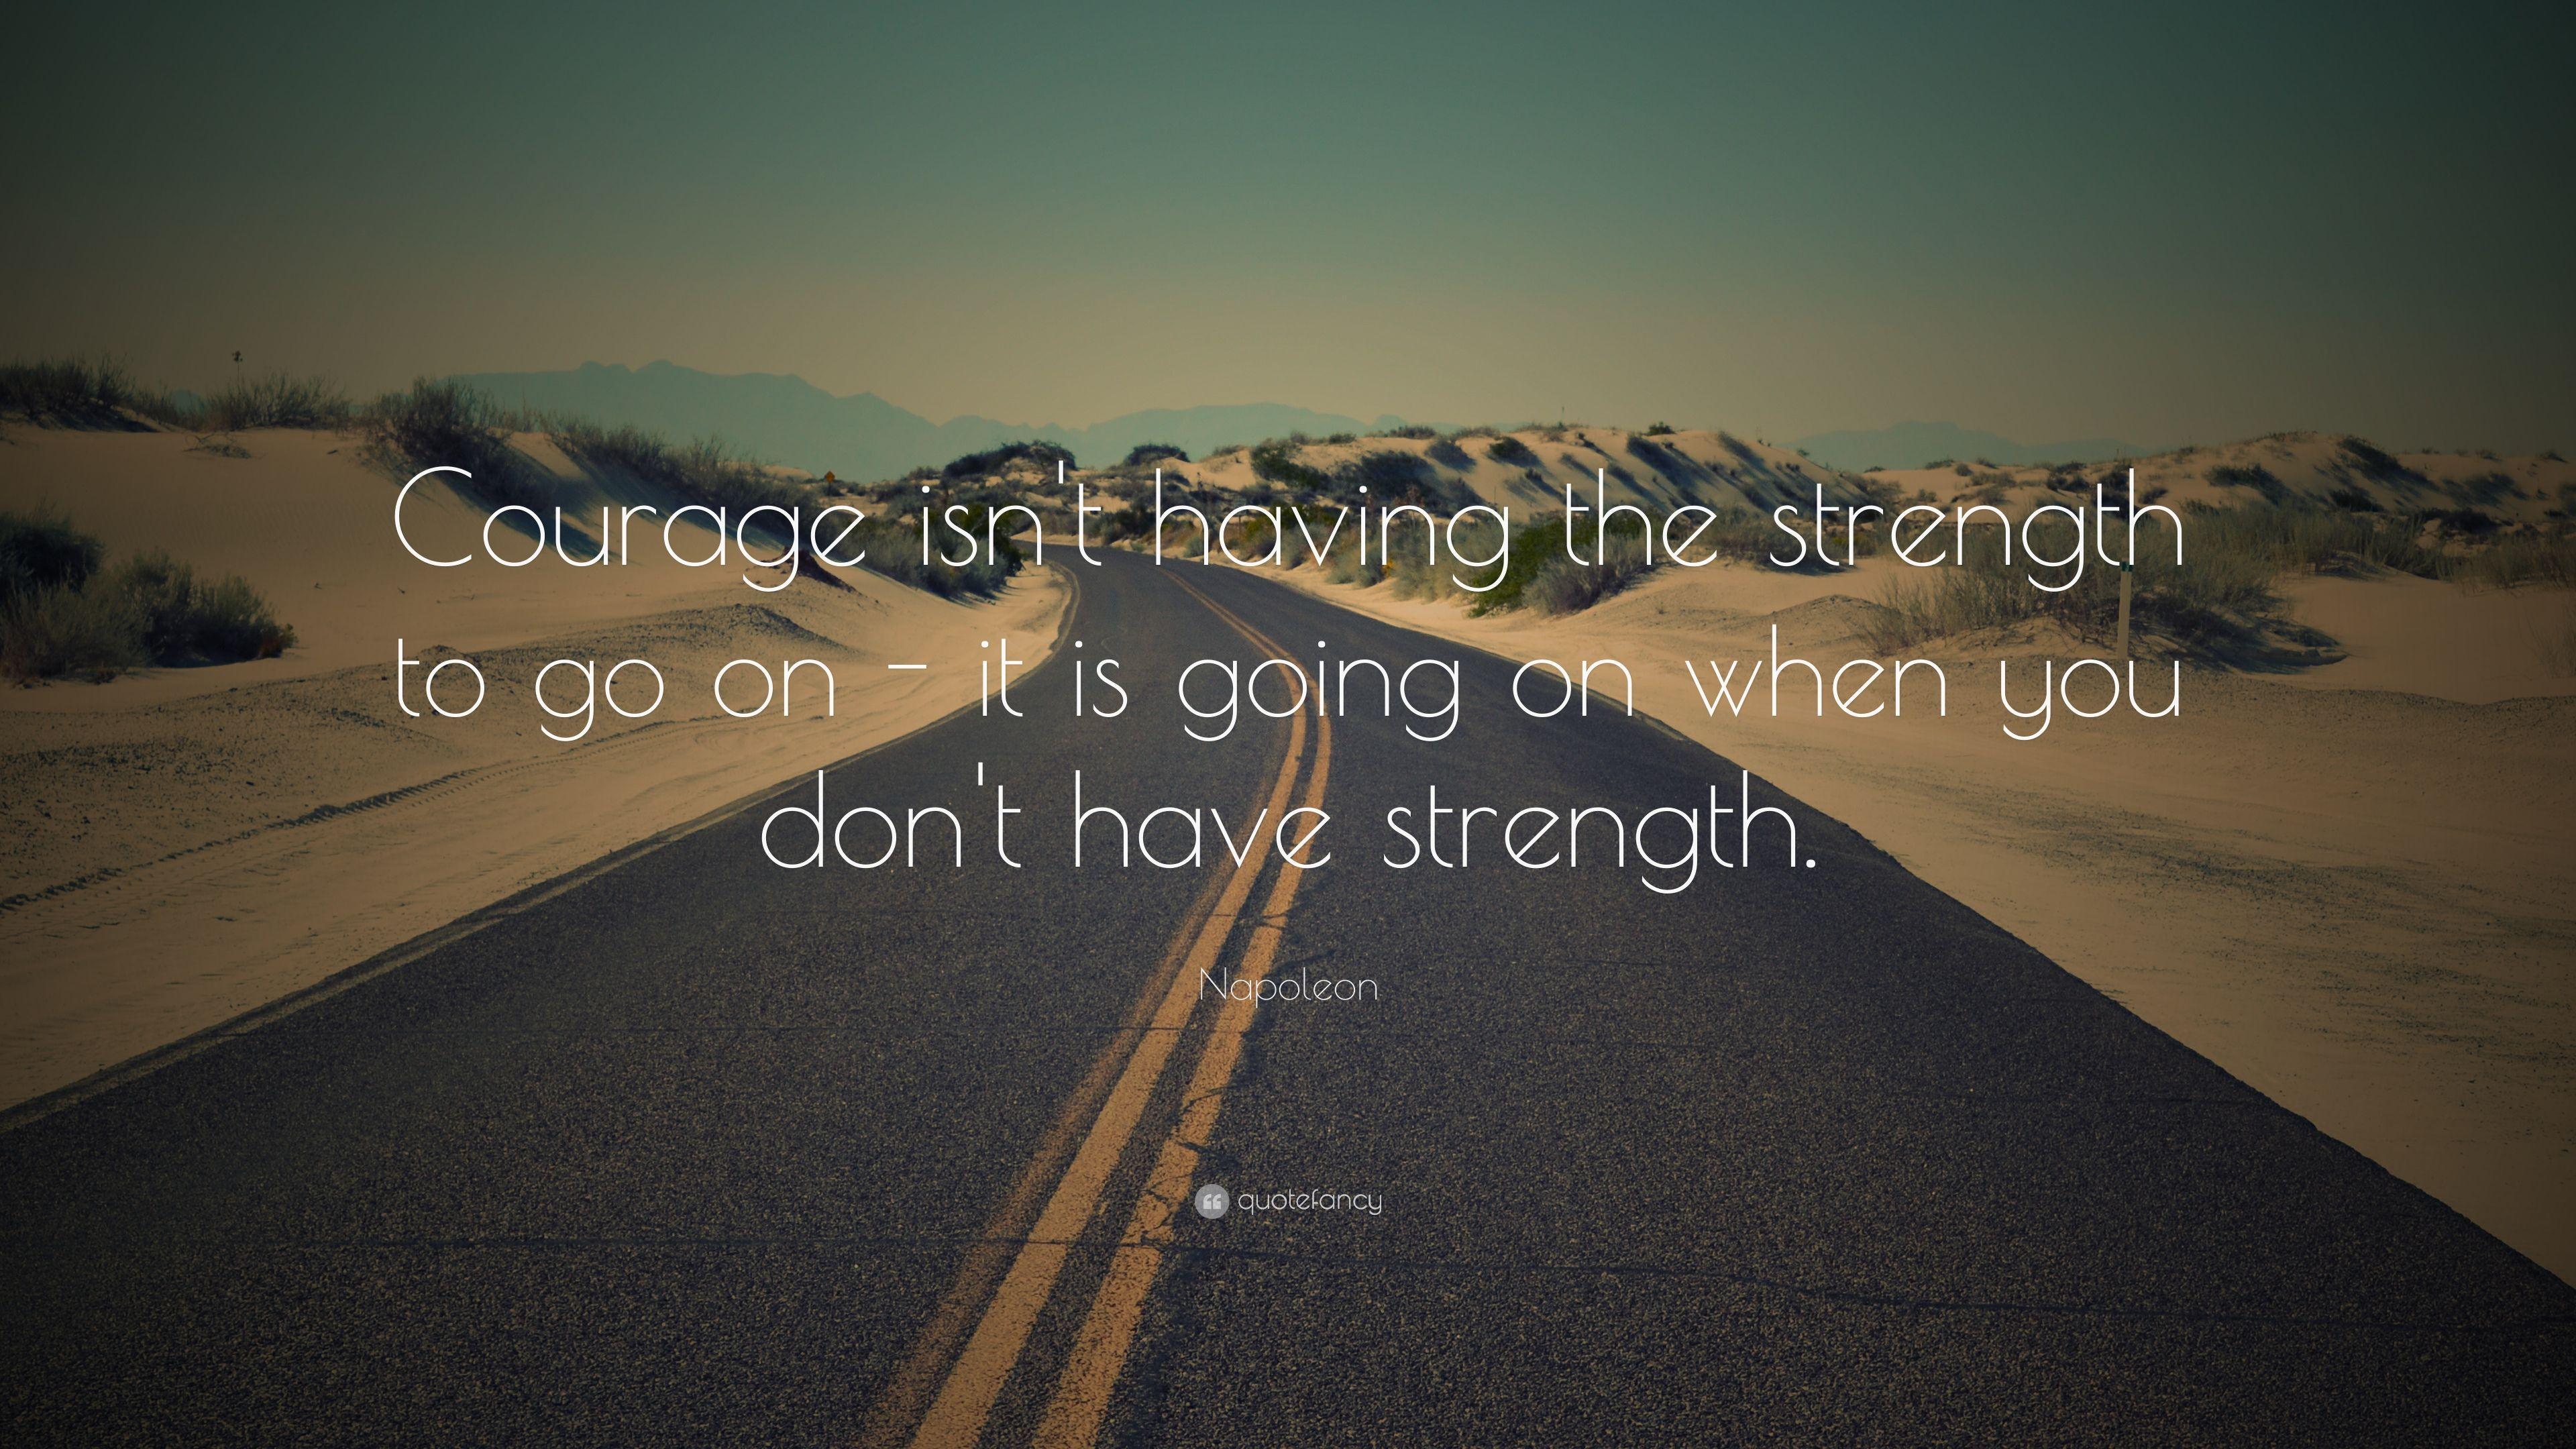 Napoleon Quote: “Courage isn't having the strength to go on